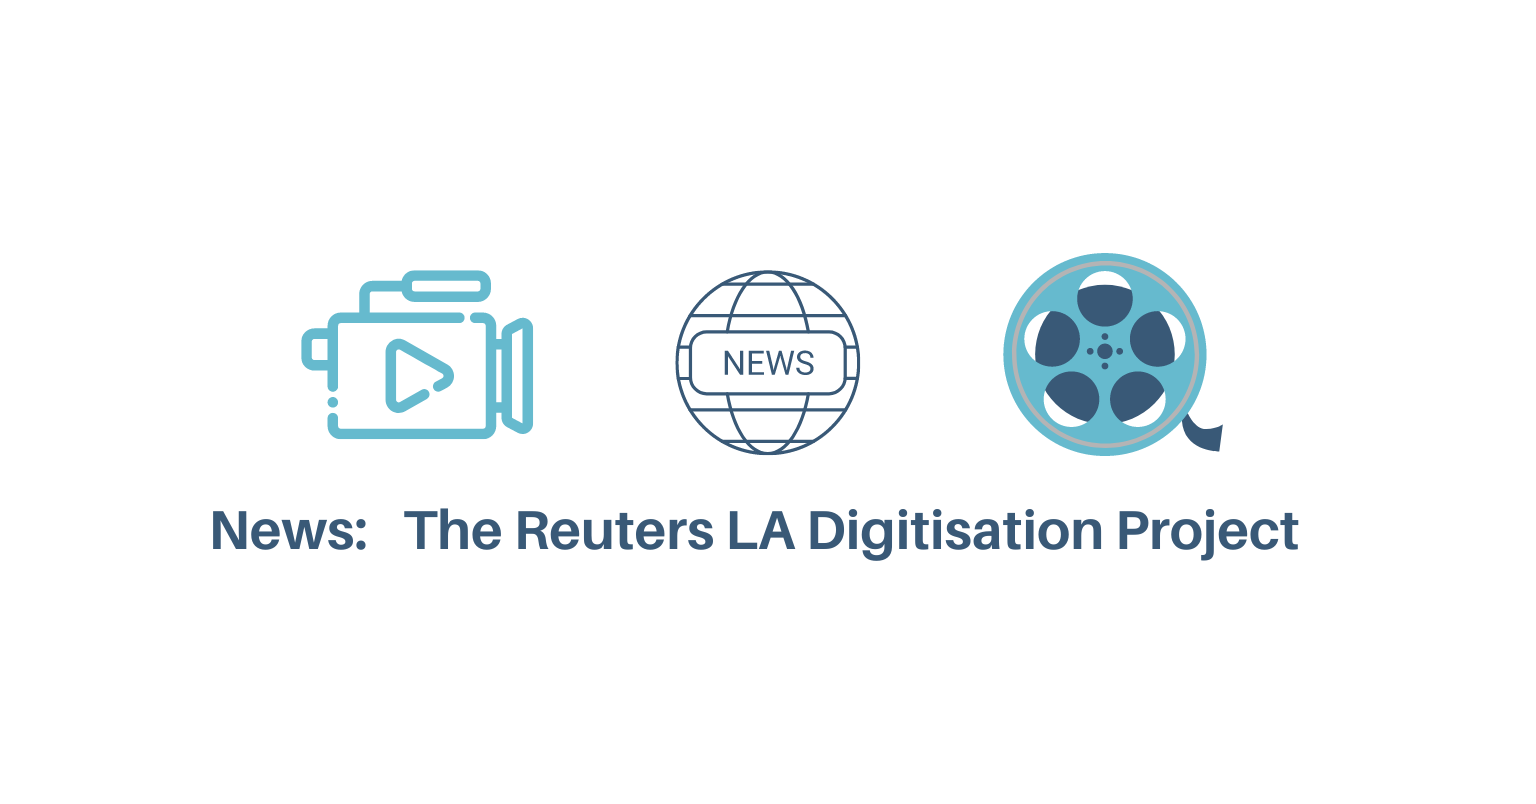 NEWS: REUTERS LOS ANGELES BUREAU DIGITISATION PROJECT